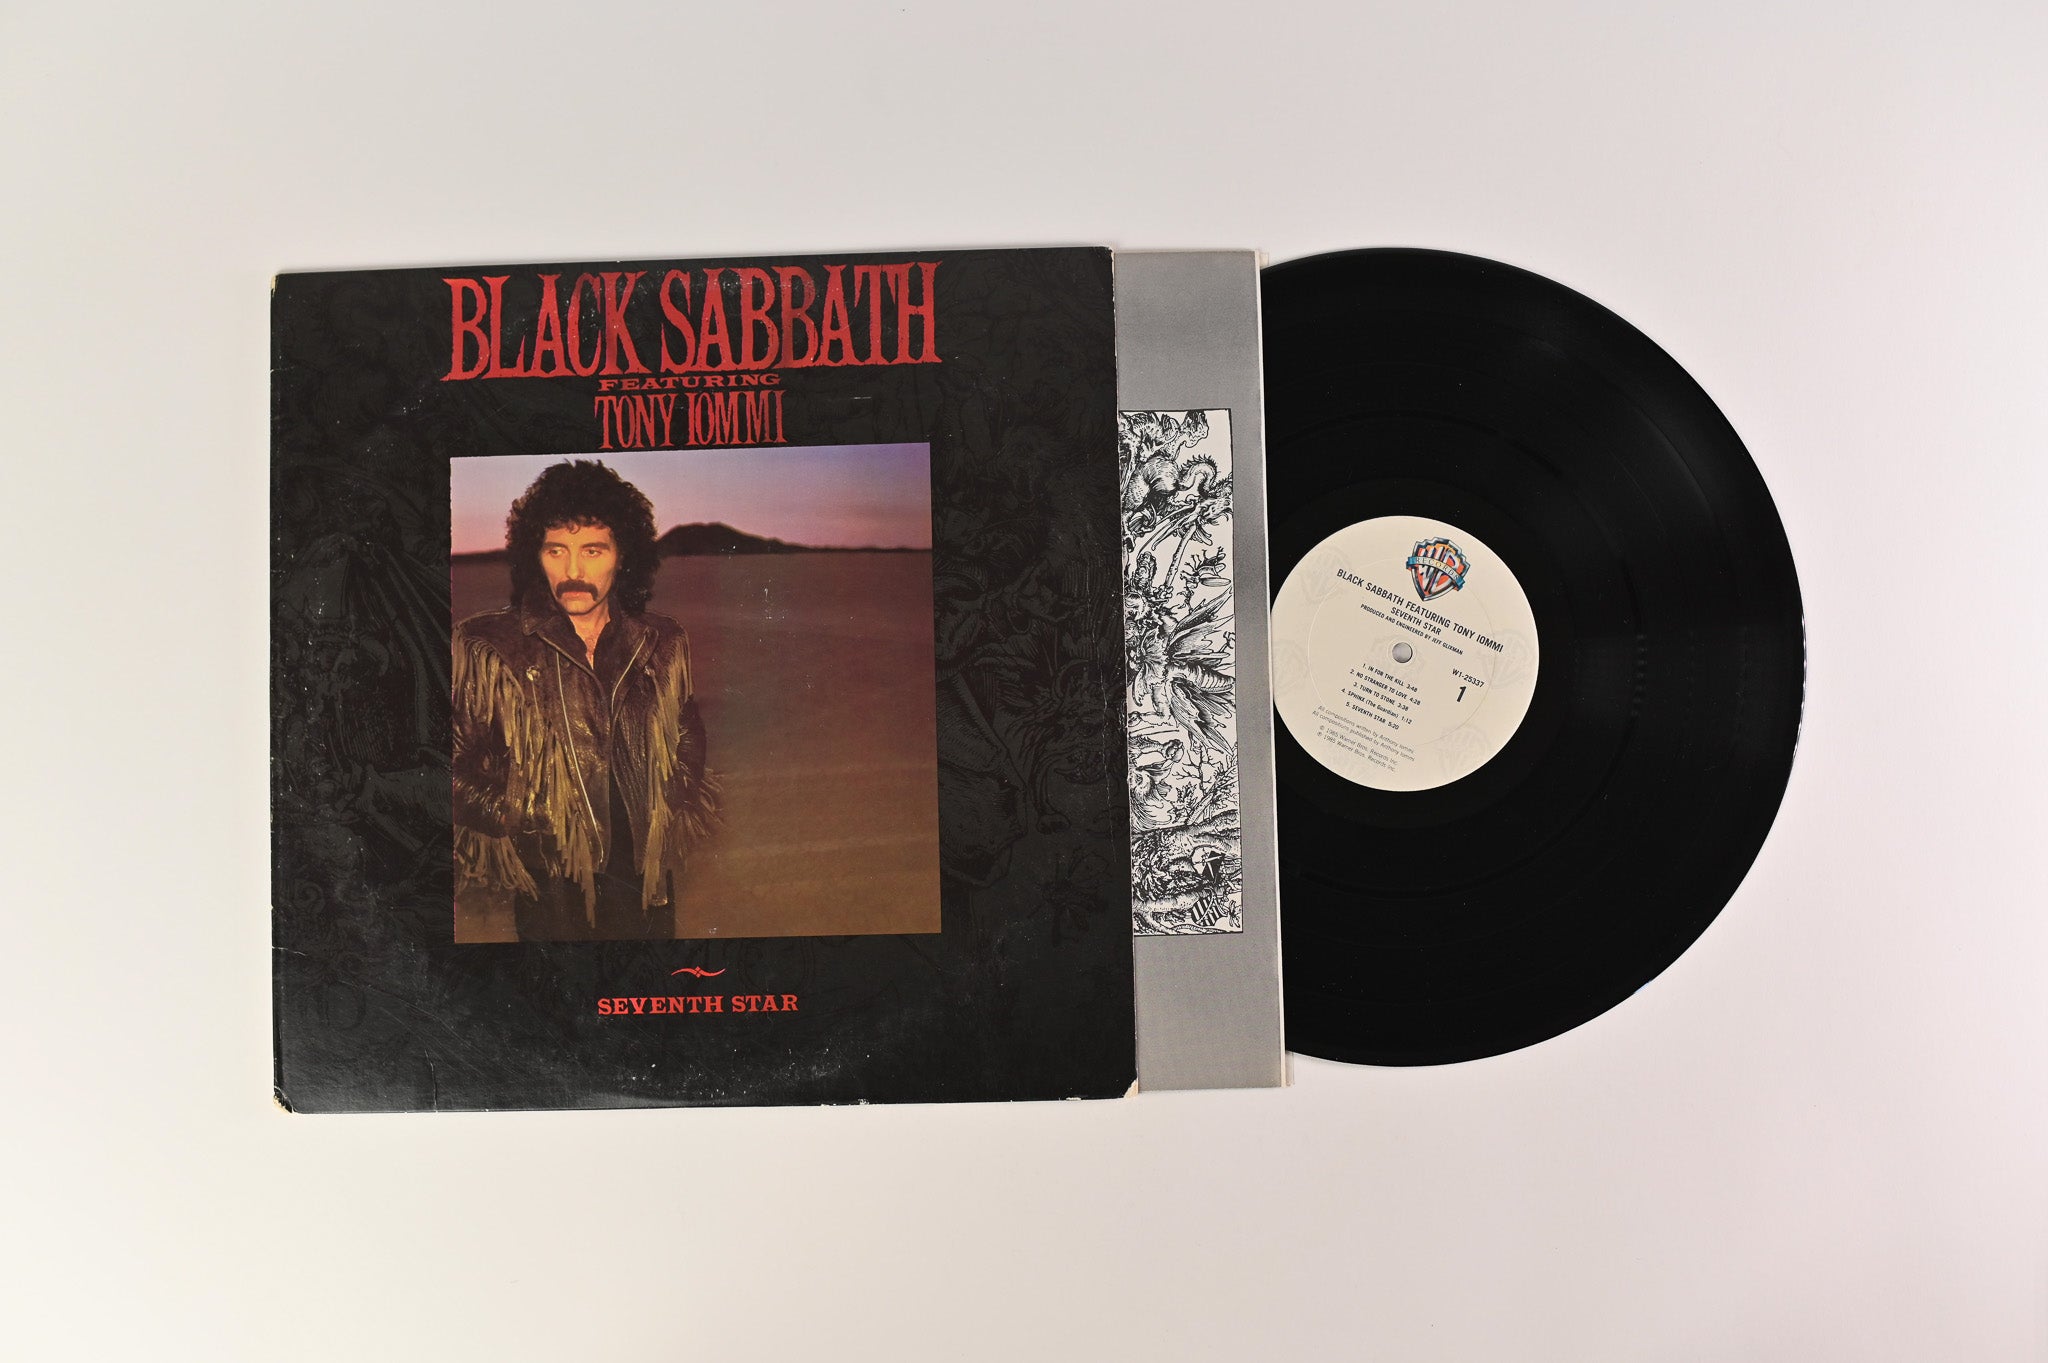 Black Sabbath - Seventh Star on Warner Bros. Records